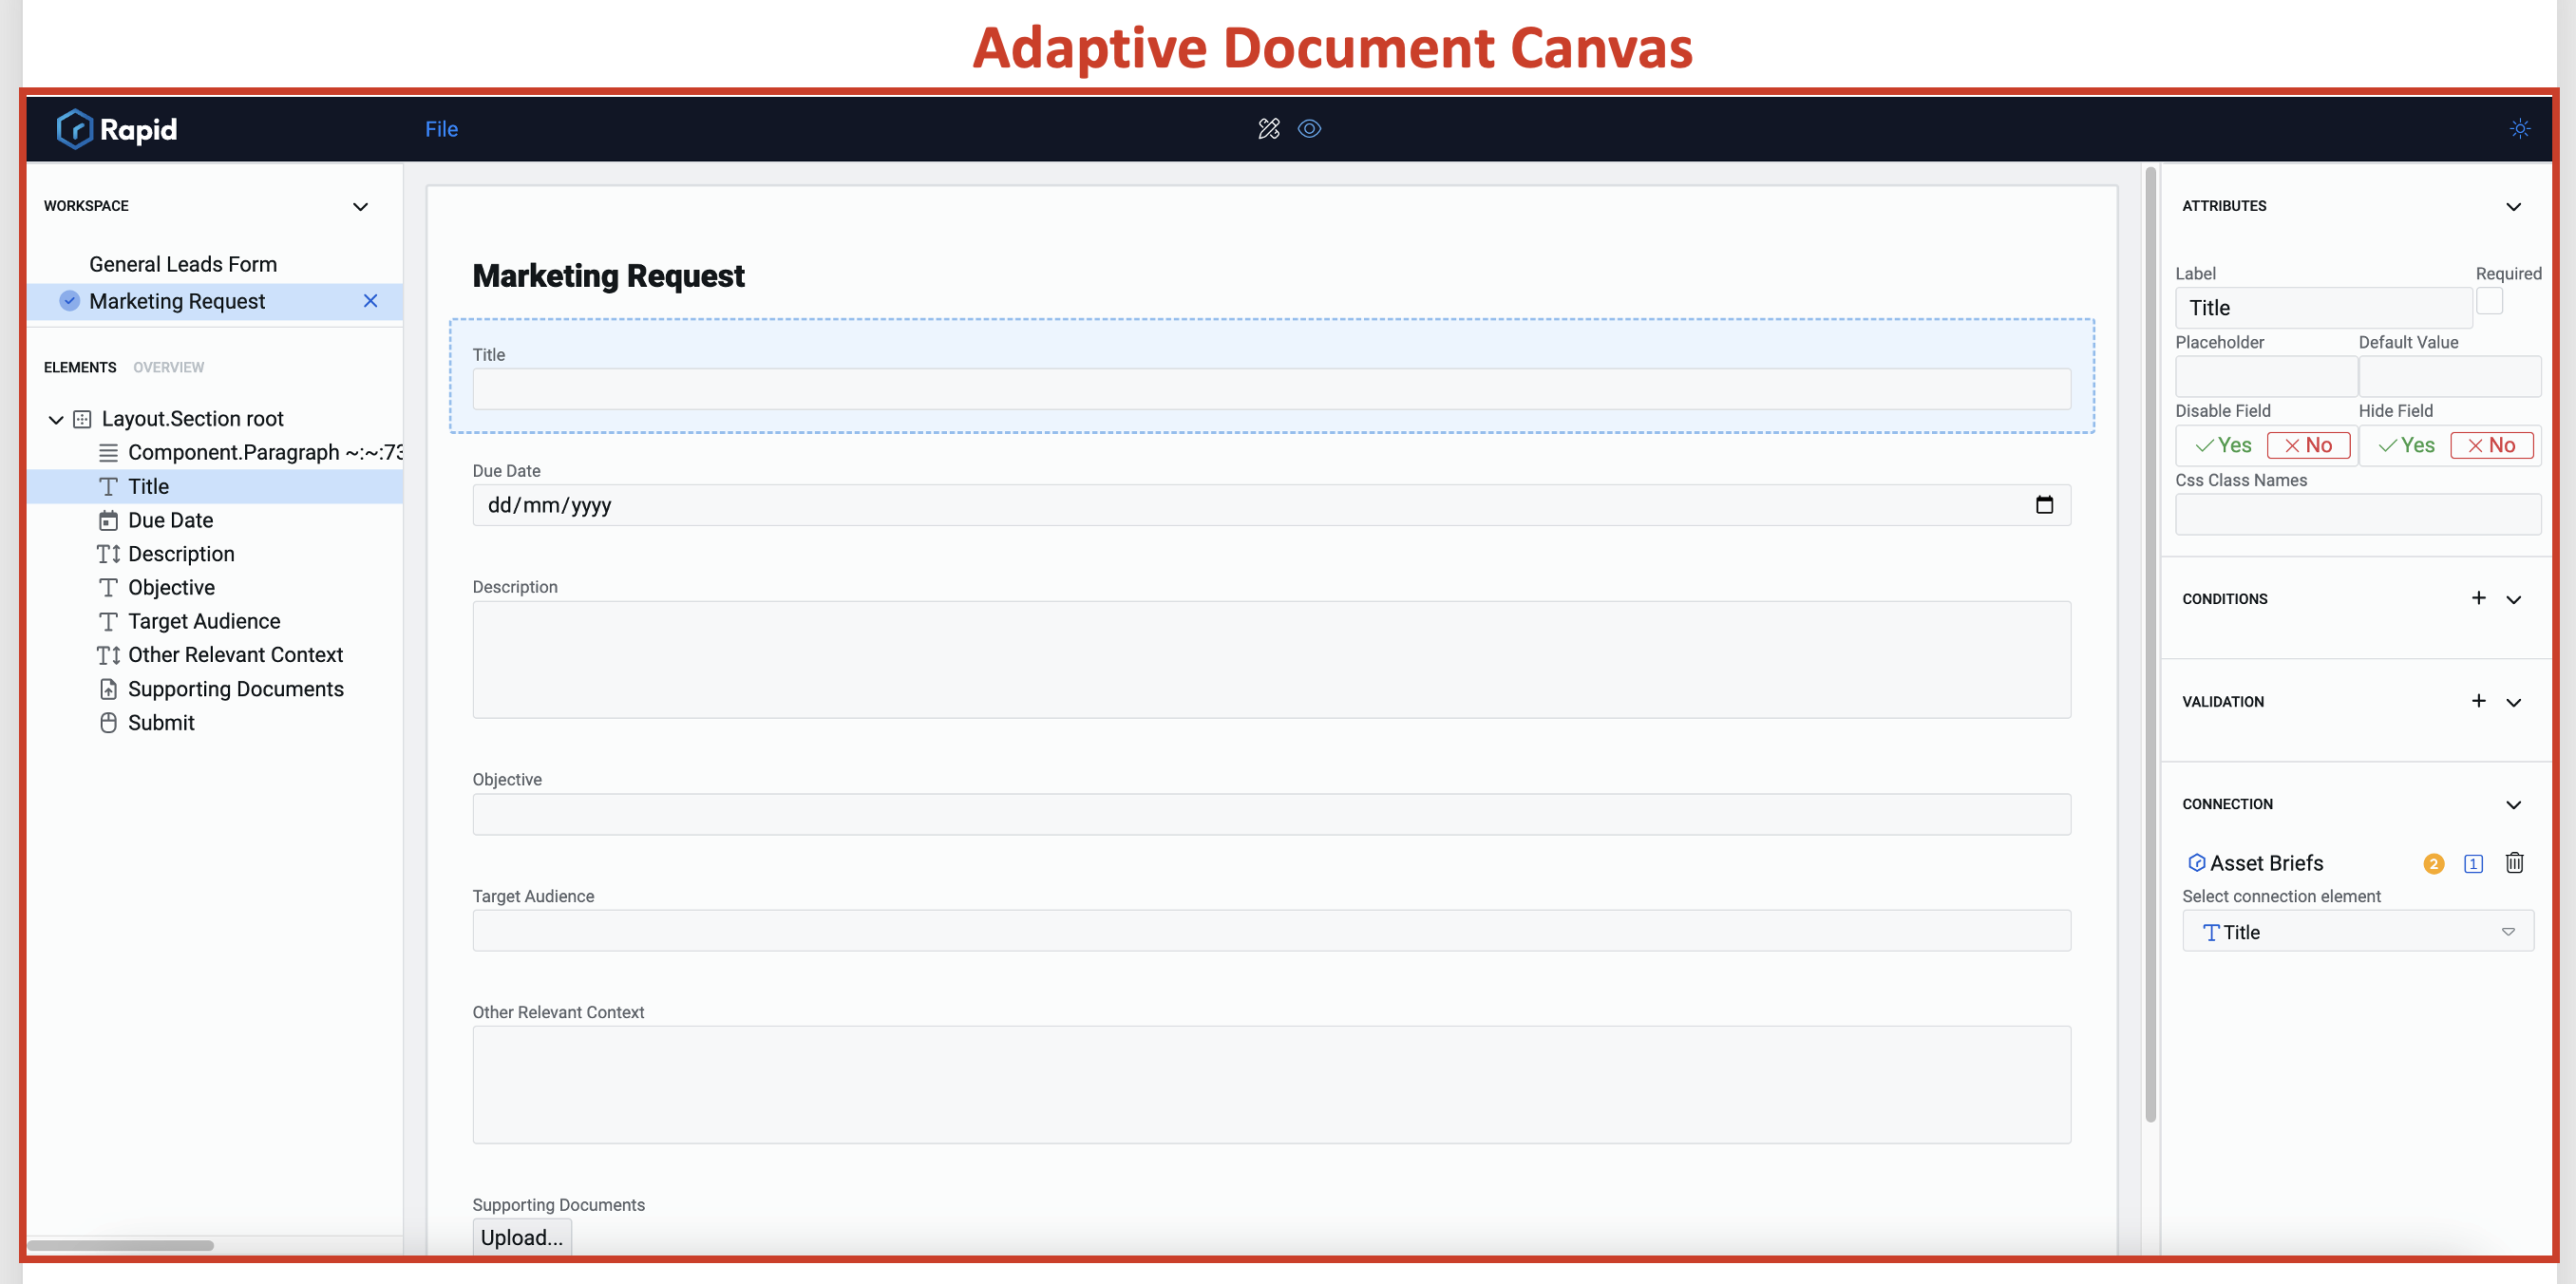 Image showing Adaptive Document Canvas